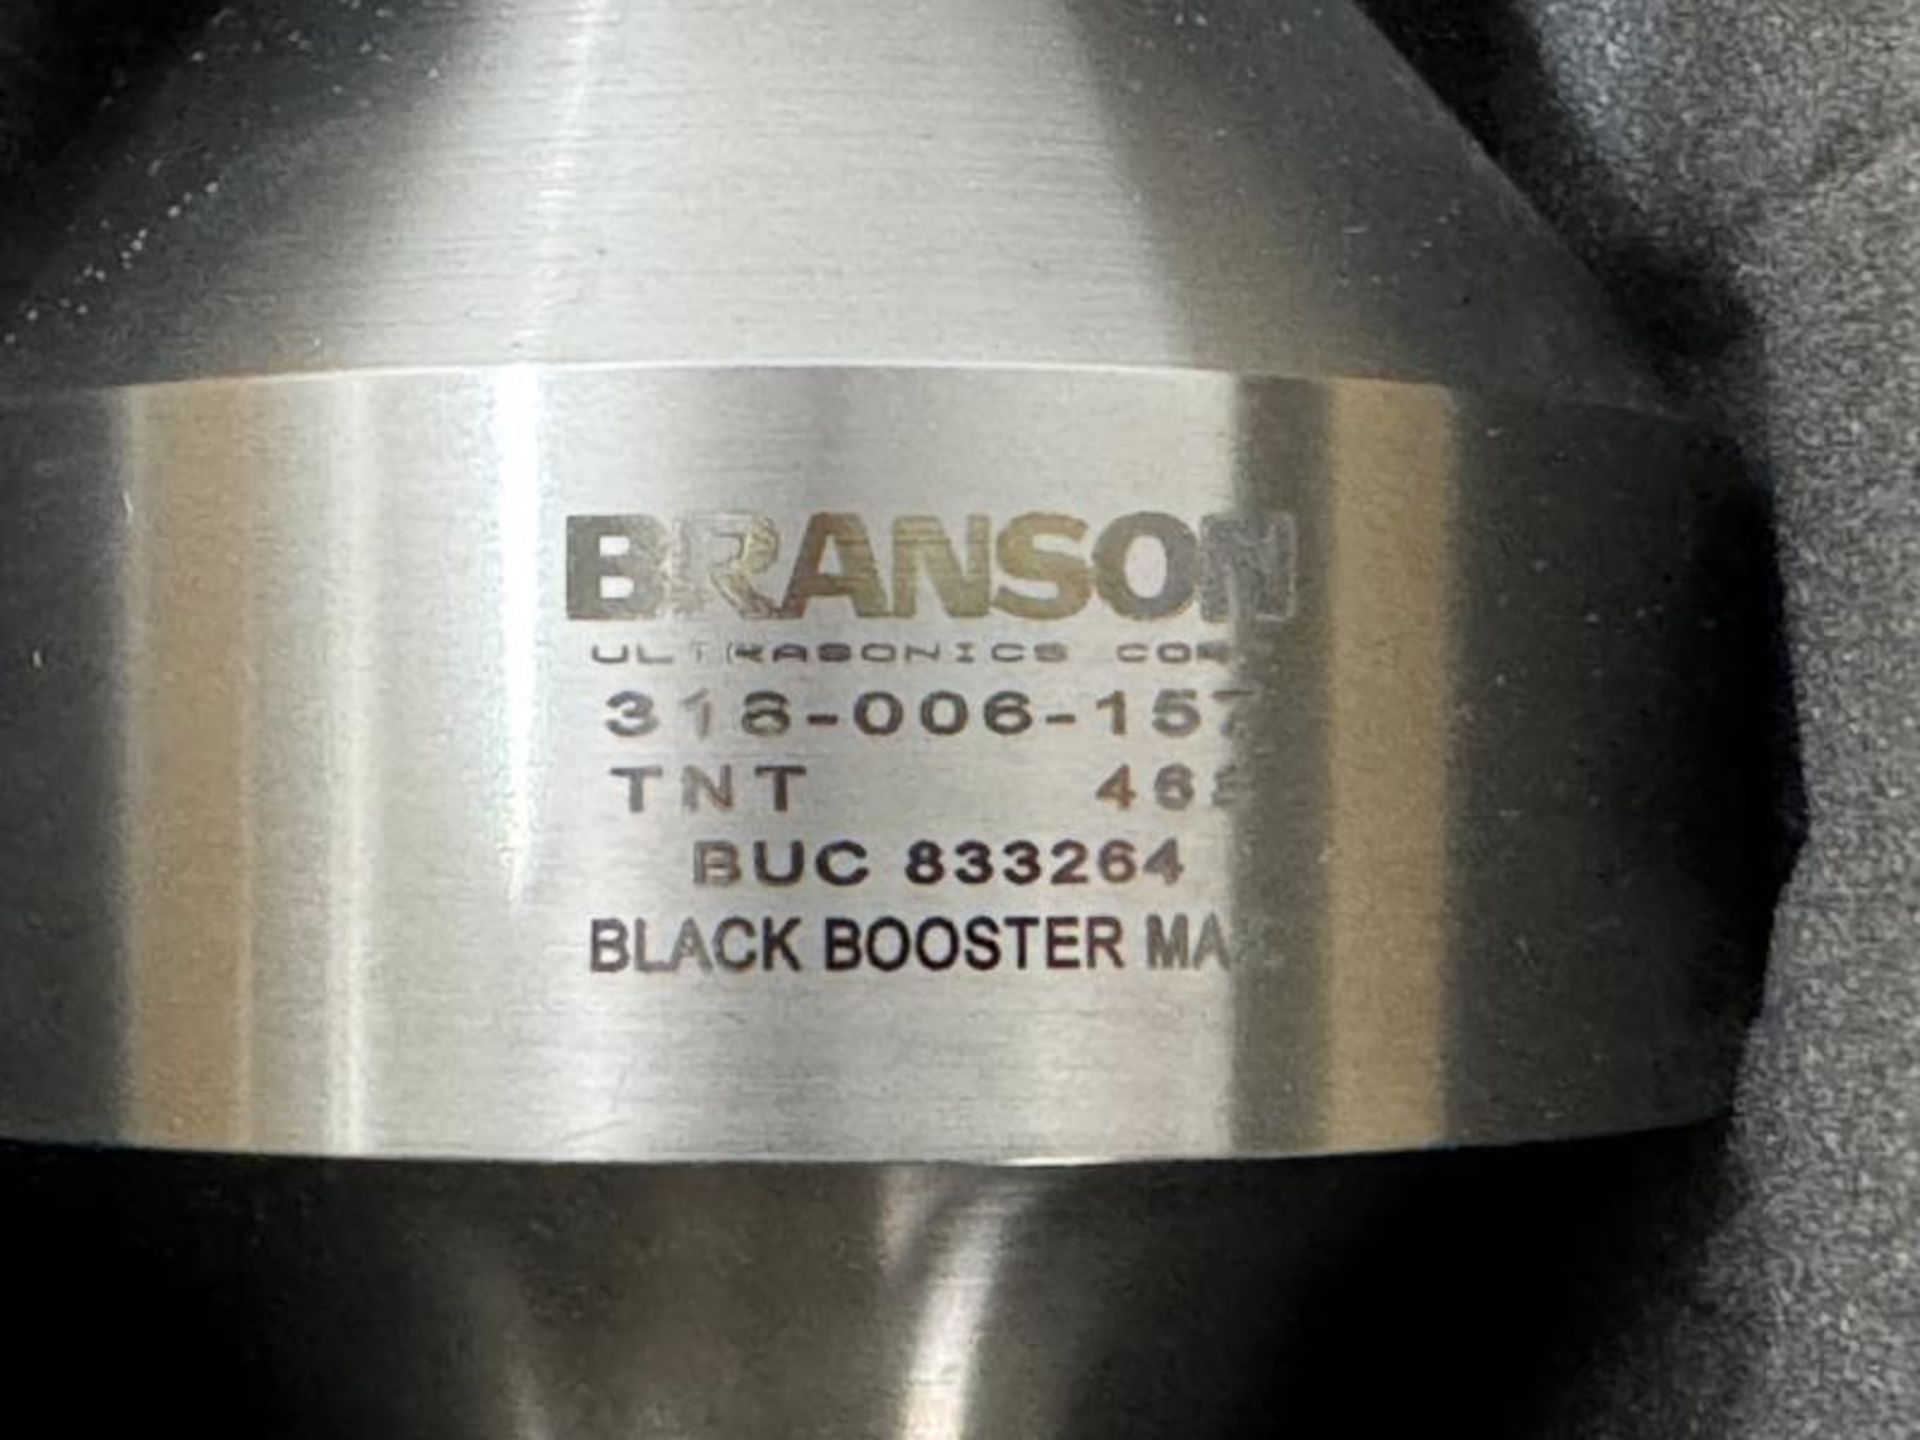 Branson Part: 318-006-157 TNT 468 BUC 833264 Black Booster Max - Image 4 of 7